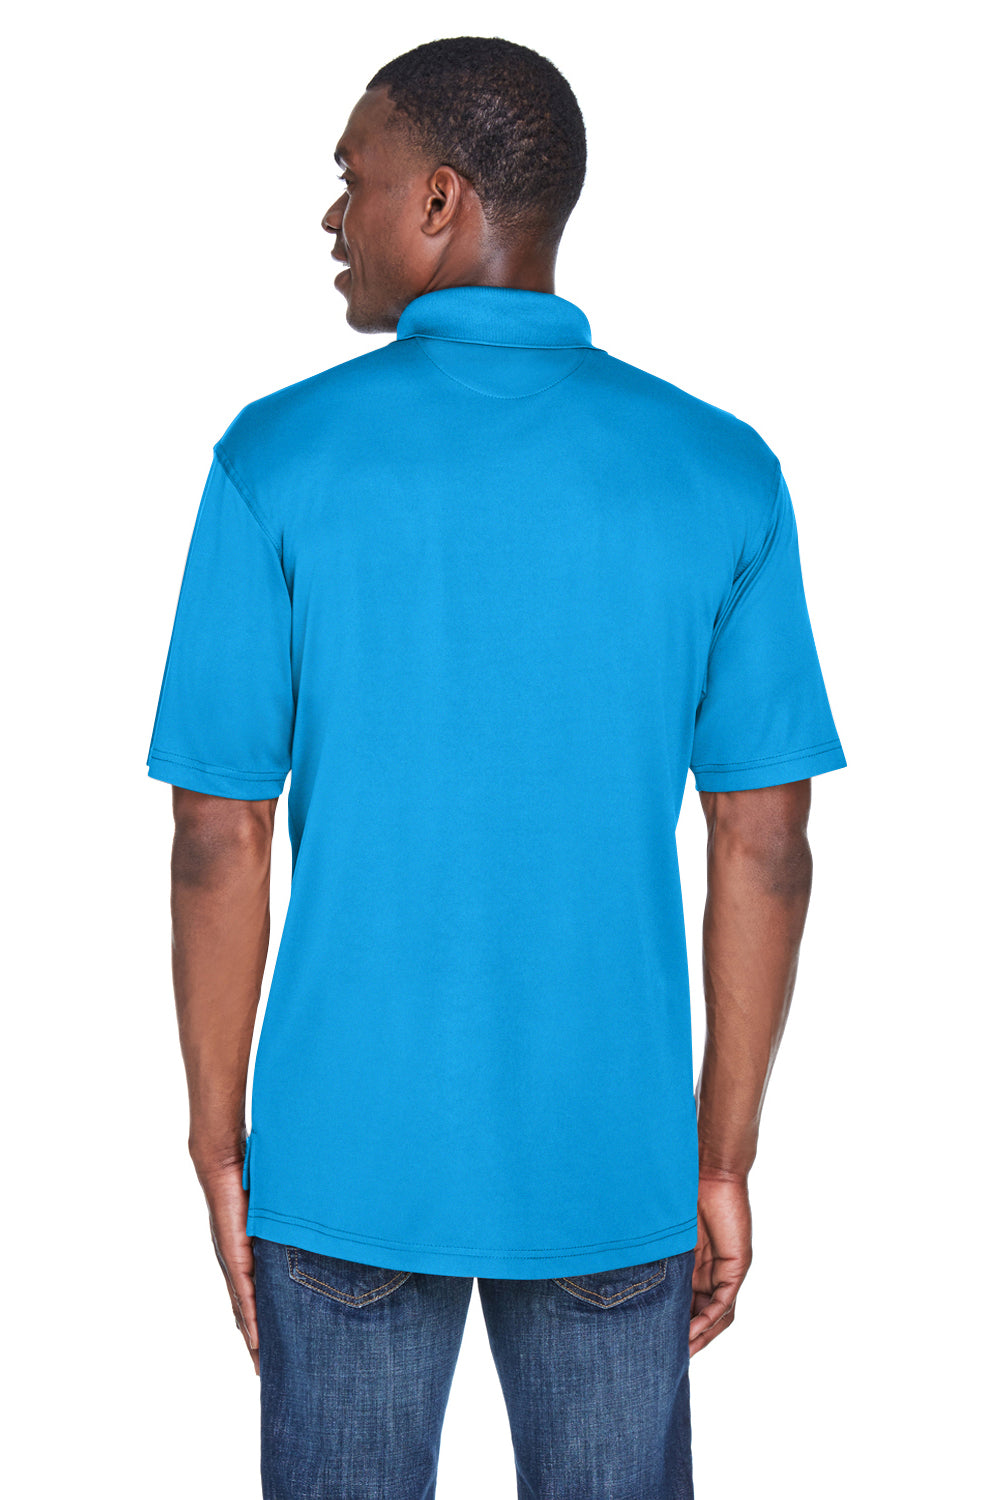 UltraClub 8425 Mens Cool & Dry Performance Moisture Wicking Short Sleeve Polo Shirt Sapphire Blue Back